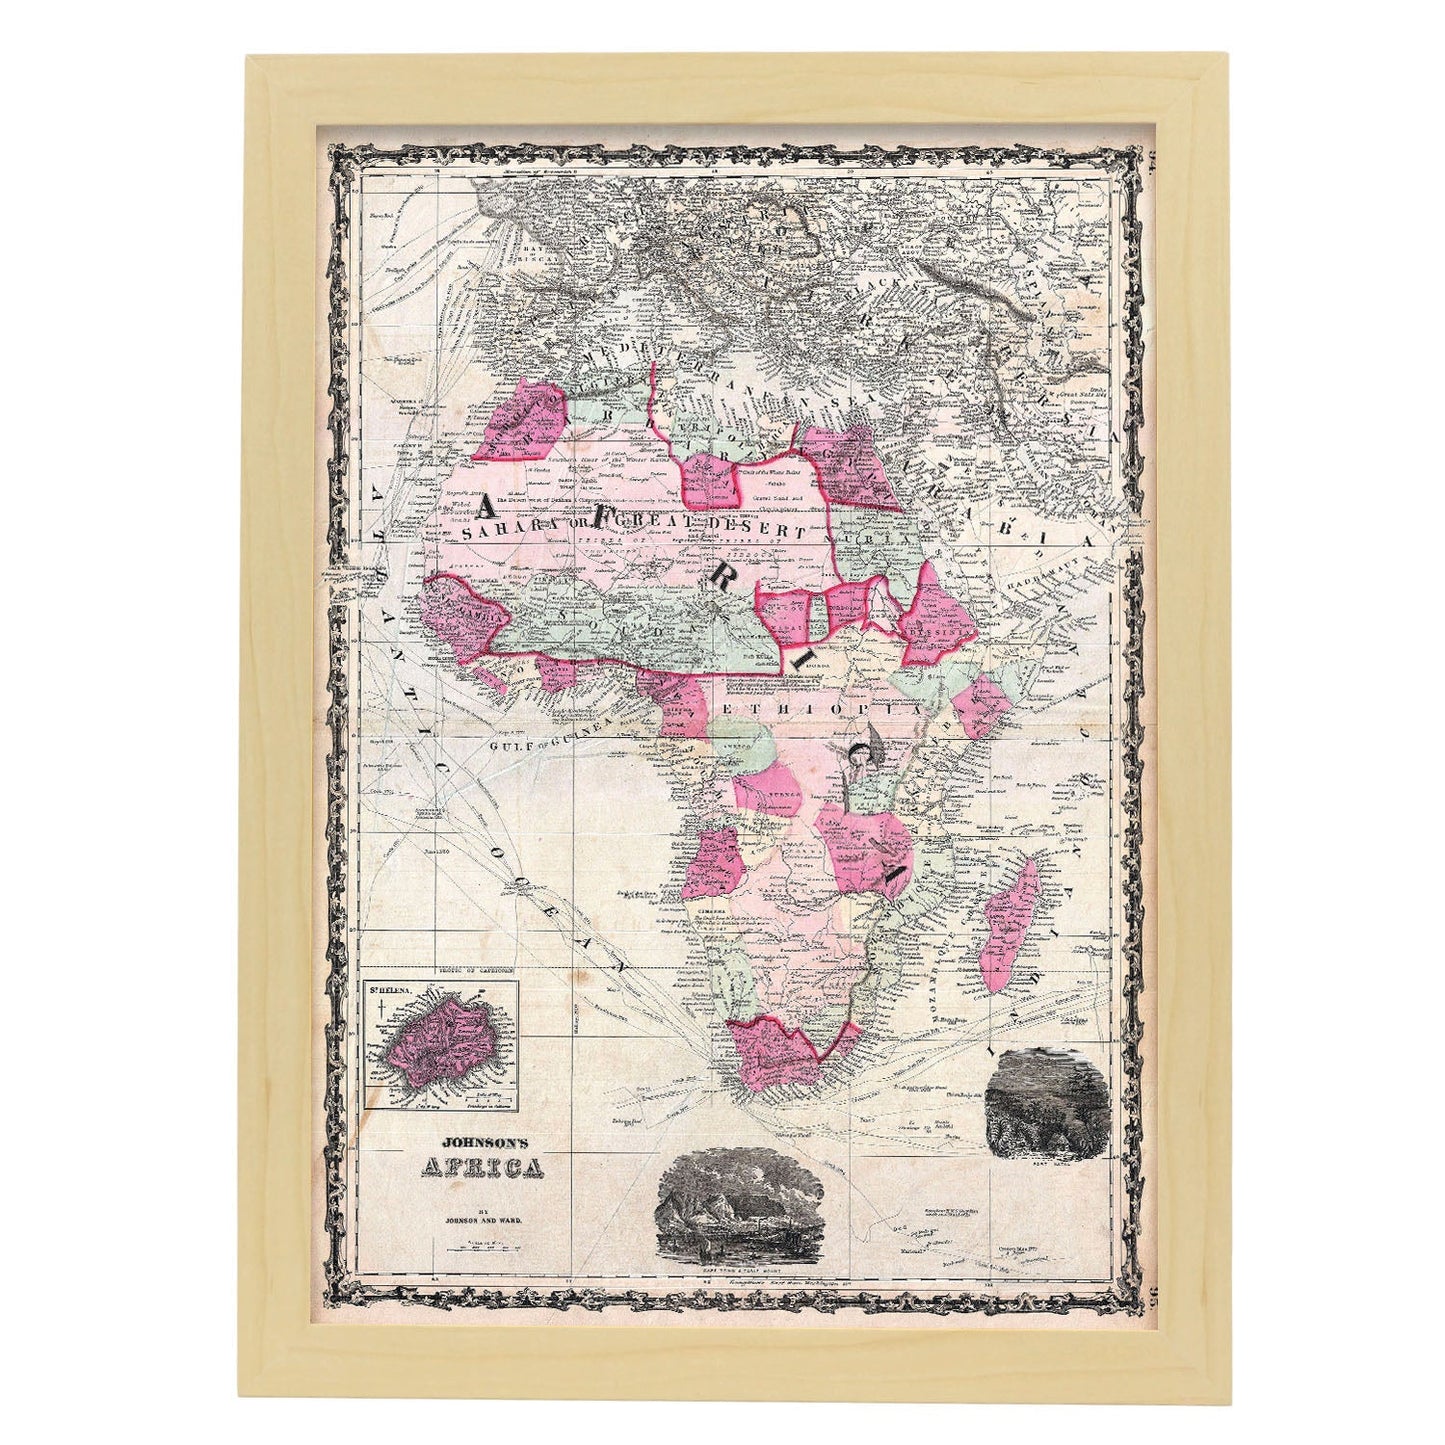 1862 Johnson Map of Africa Geographicus Afria johnson 1862-Artwork-Nacnic-A3-Marco Madera clara-Nacnic Estudio SL